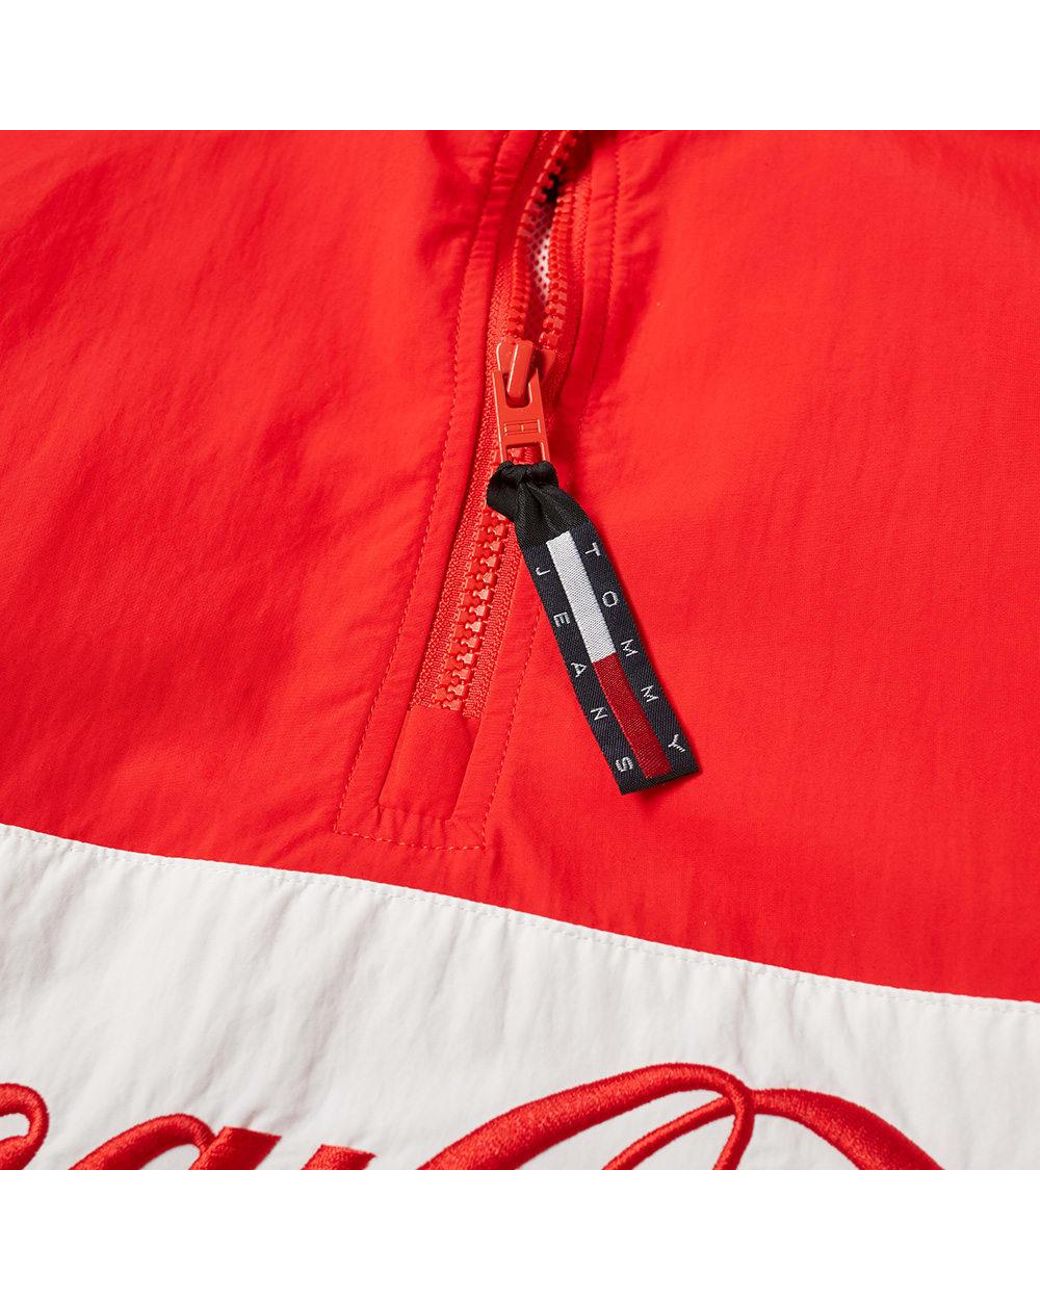 Tommy Hilfiger Denim X Coca-cola Jacket in Red for Men | Lyst Australia